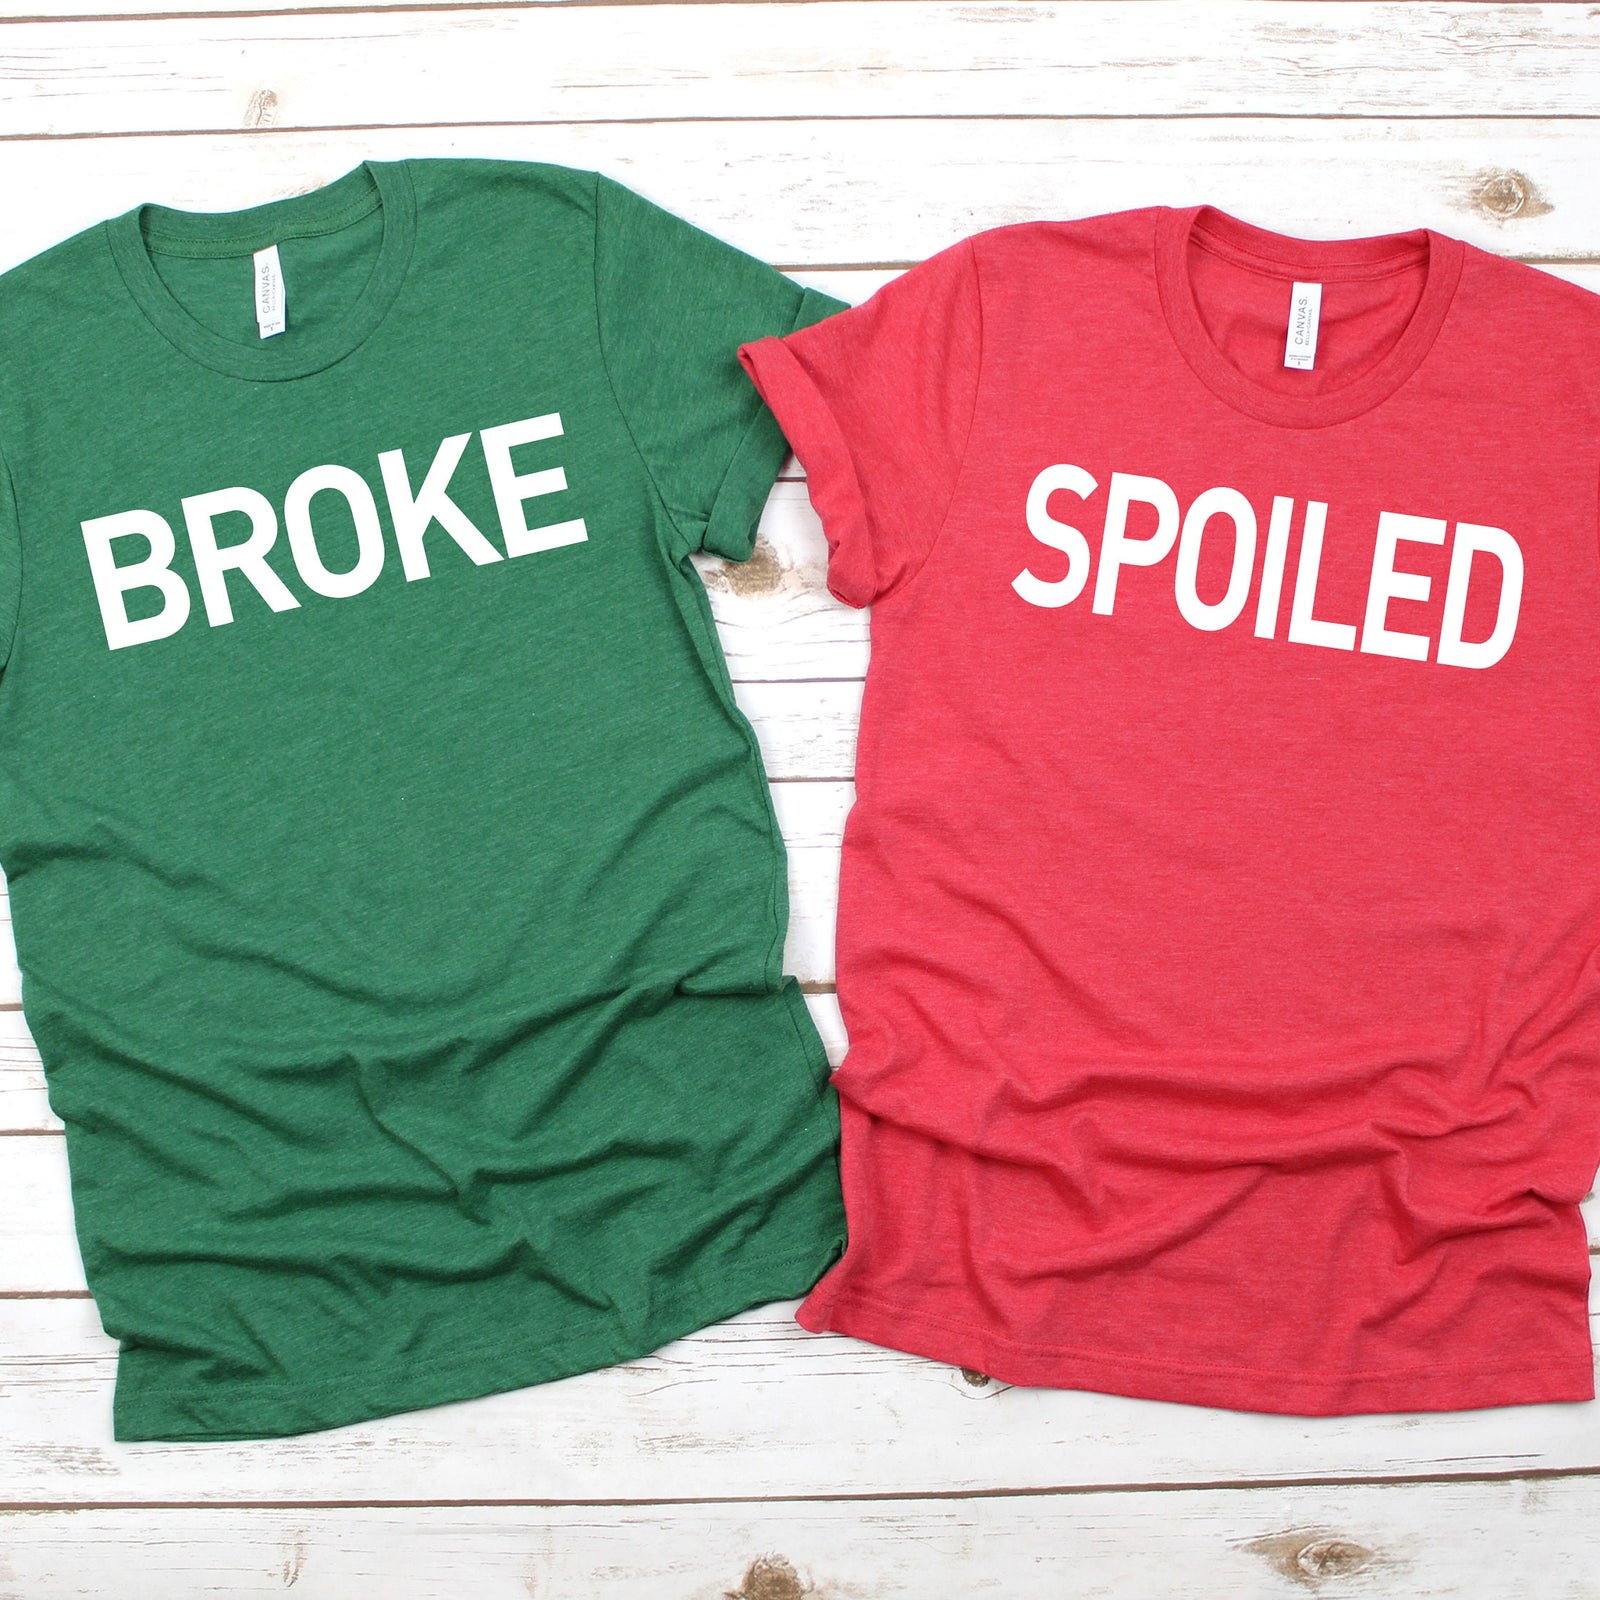 Spoiled & Broke Shirt - Funny Couples T Shirts - Cute Matching Shirts for Couples - Funny Matching Valentines Shirts